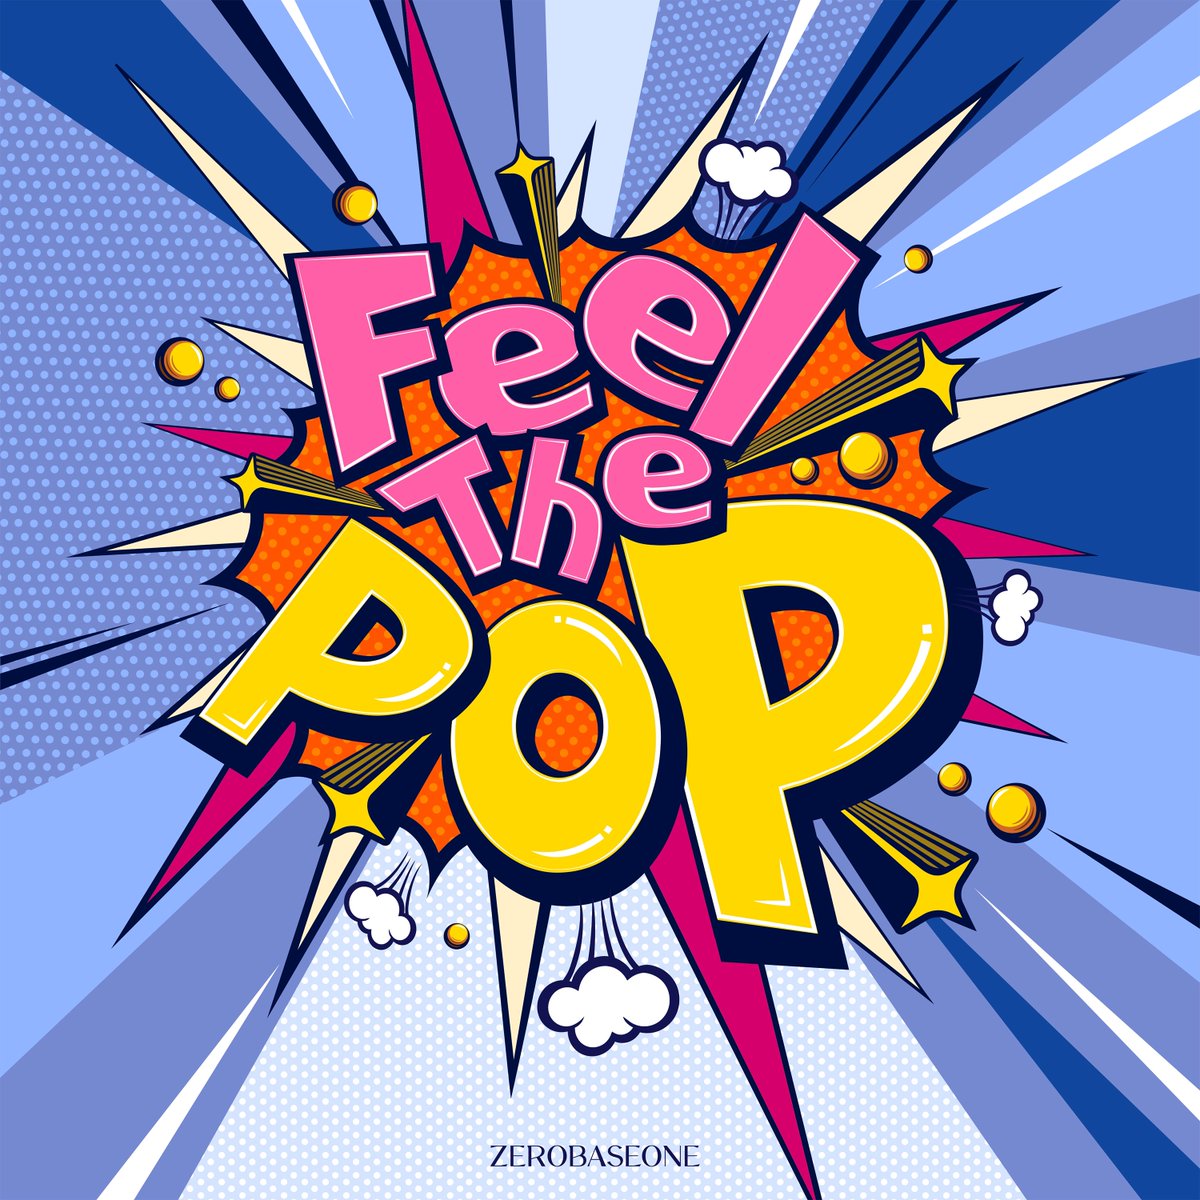 _📌 
ZEROBASEONE The 3rd Mini Album
[𝐘𝐨𝐮 𝐡𝐚𝐝 𝐦𝐞 𝐚𝐭 𝐇𝐄𝐋𝐋𝐎] 
“Feel the POP (Japanese ver.)”配信記念💙💨

Pre-add / Pre-saveキャンペーンがスタート✨
 
5/17(金)0:00より配信の「Feel the POP (Japanese ver.)」を期間内にApple Music・SpotifyでPre-add /…